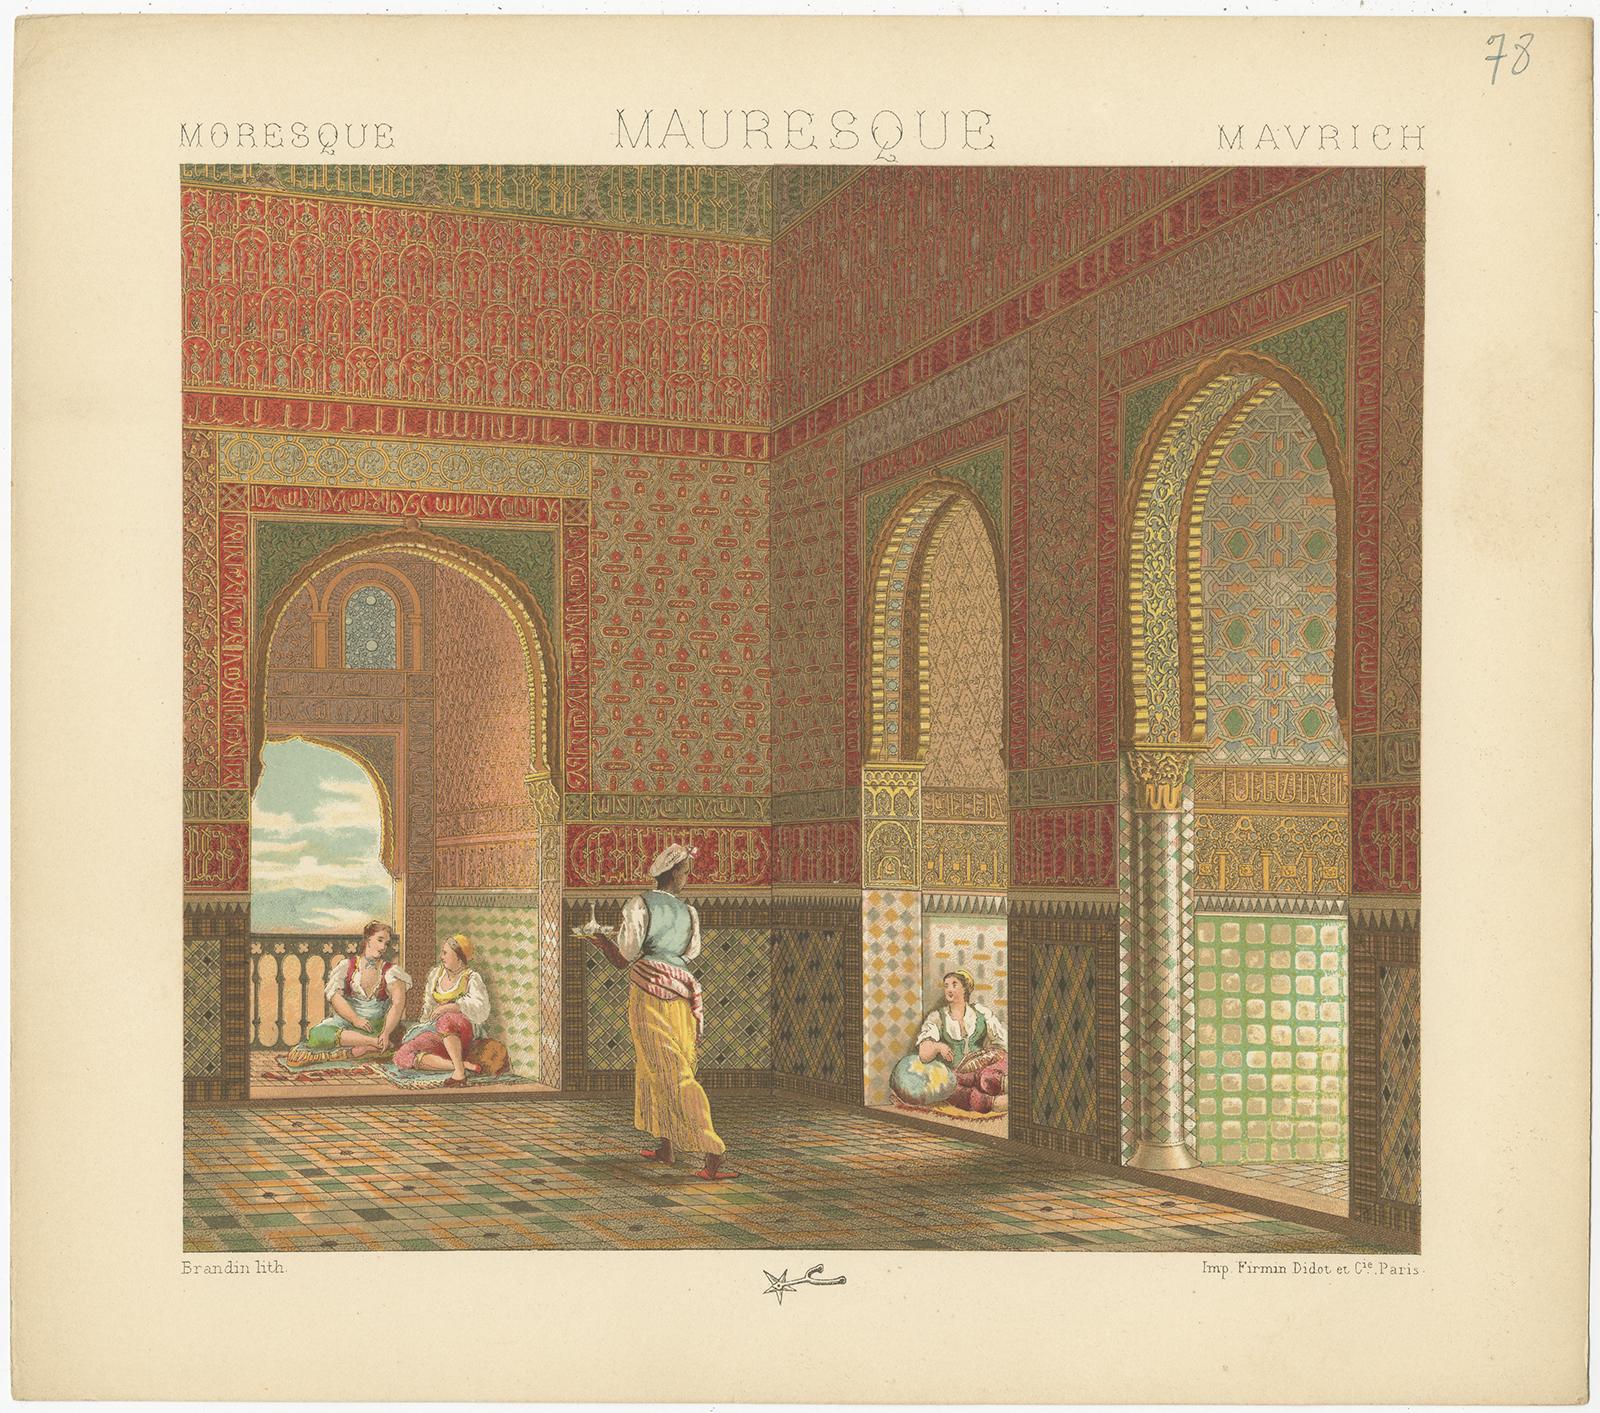 Antique print titled 'Moresque - Mauresque - Mavrich'. Chromolithograph of Mavrich Interior. This print originates from 'Le Costume Historique' by M.A. Racinet. Published, circa 1880.